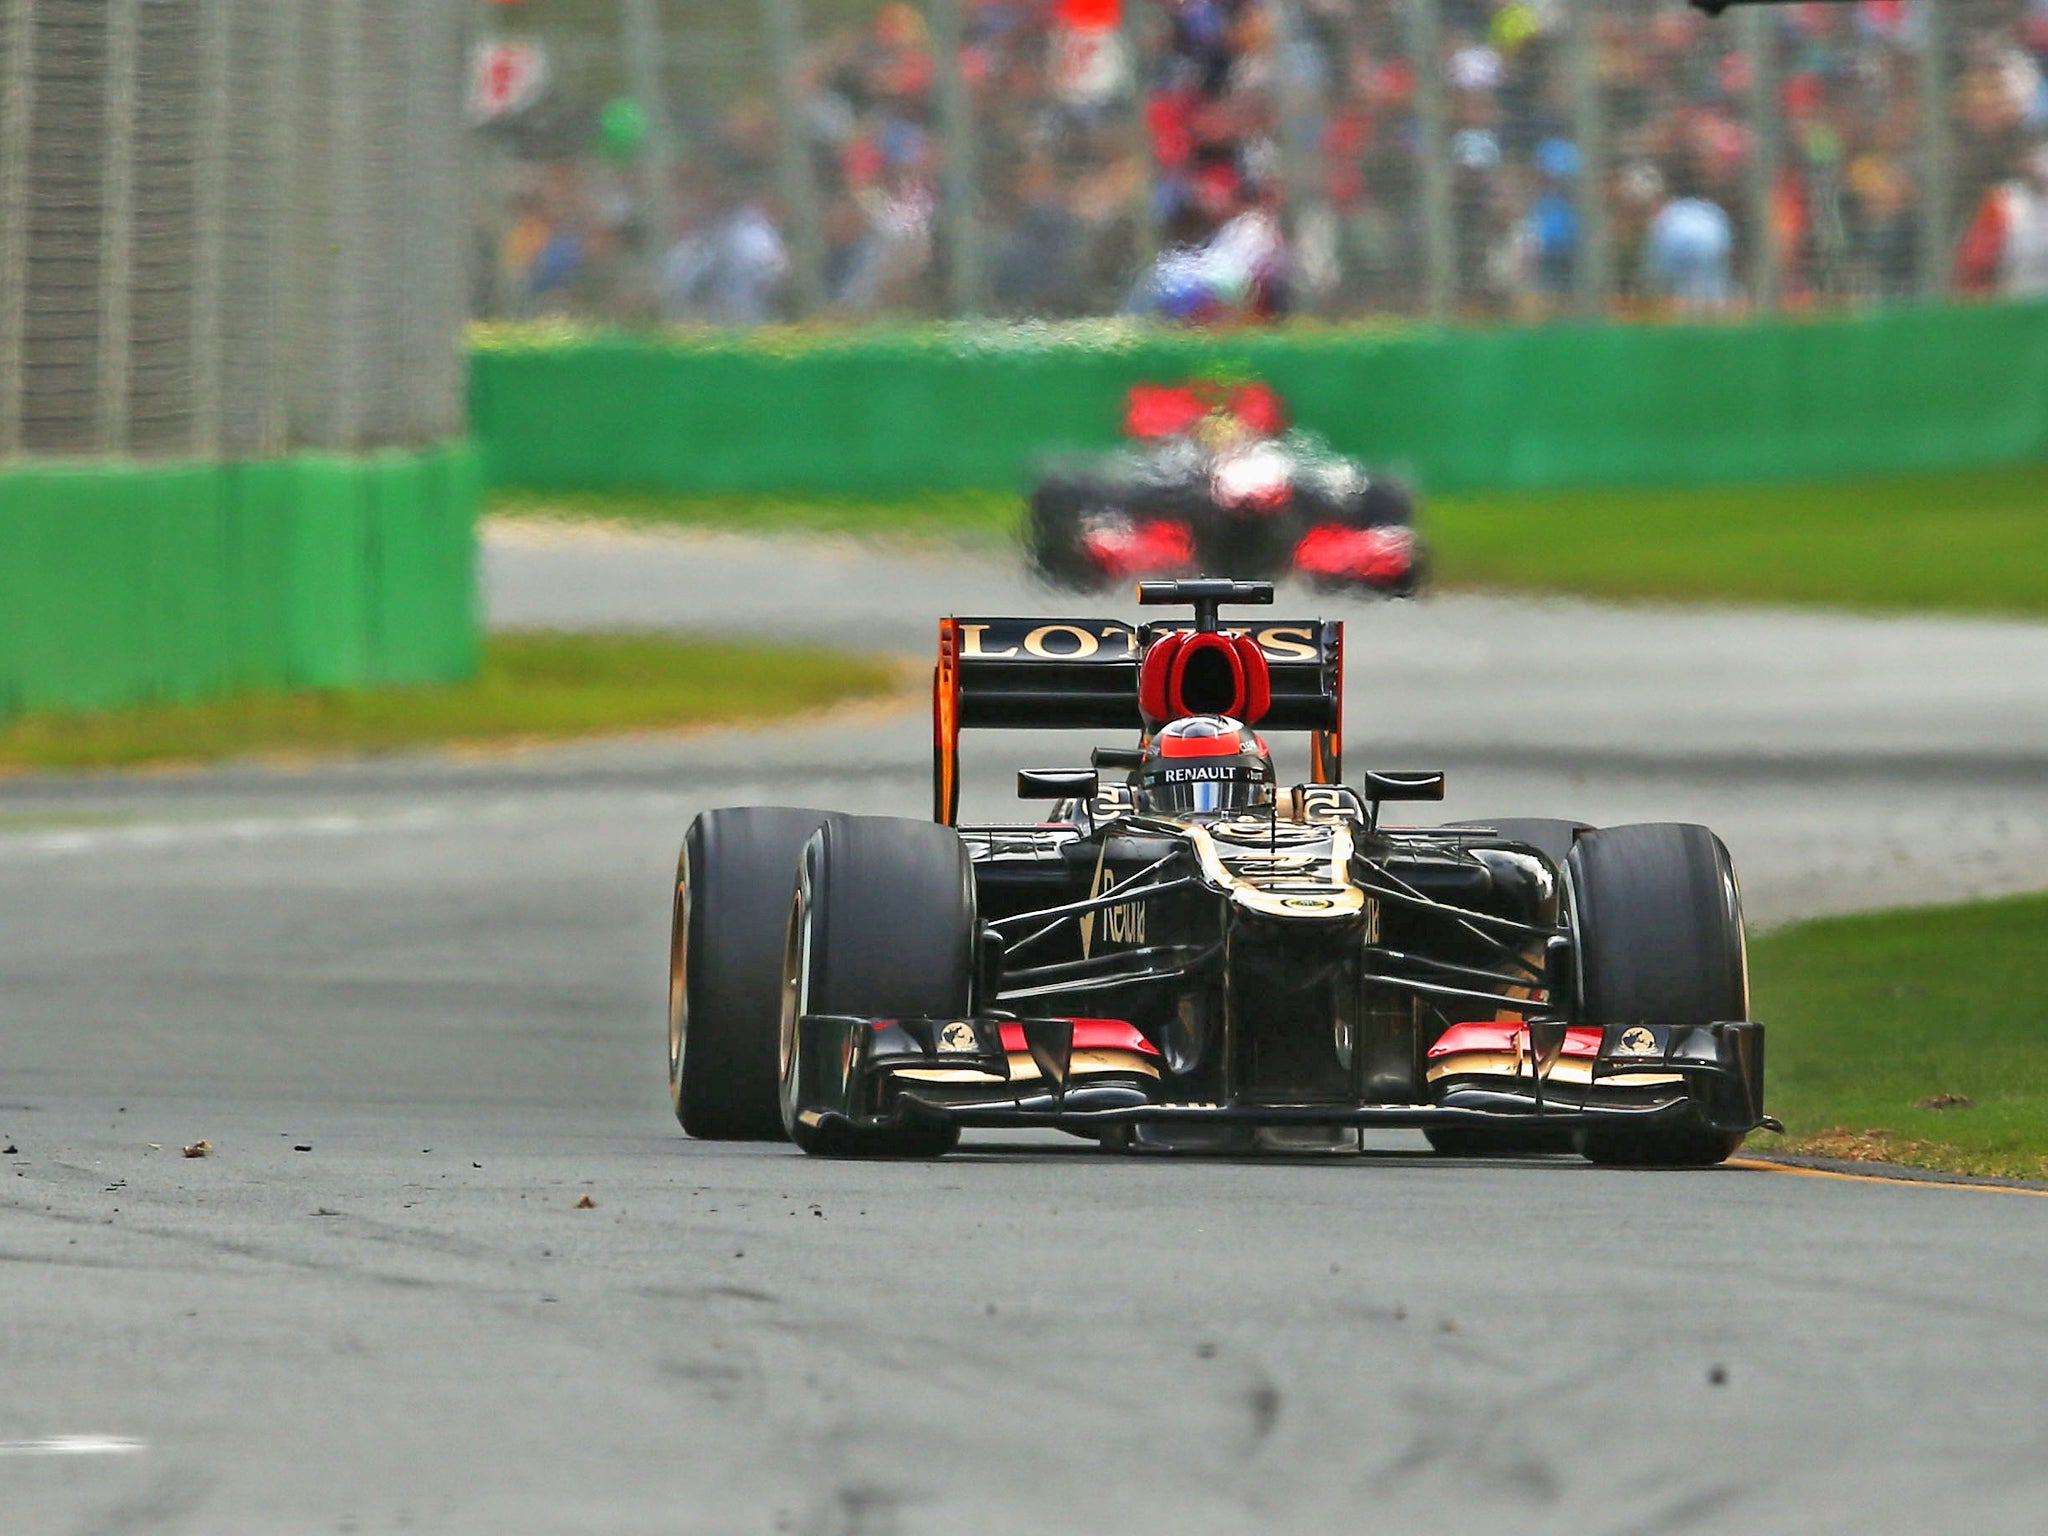 Kimi Raikkonen on his way to winning the Australian Formula One Grand Prix at the Albert Park Circuit